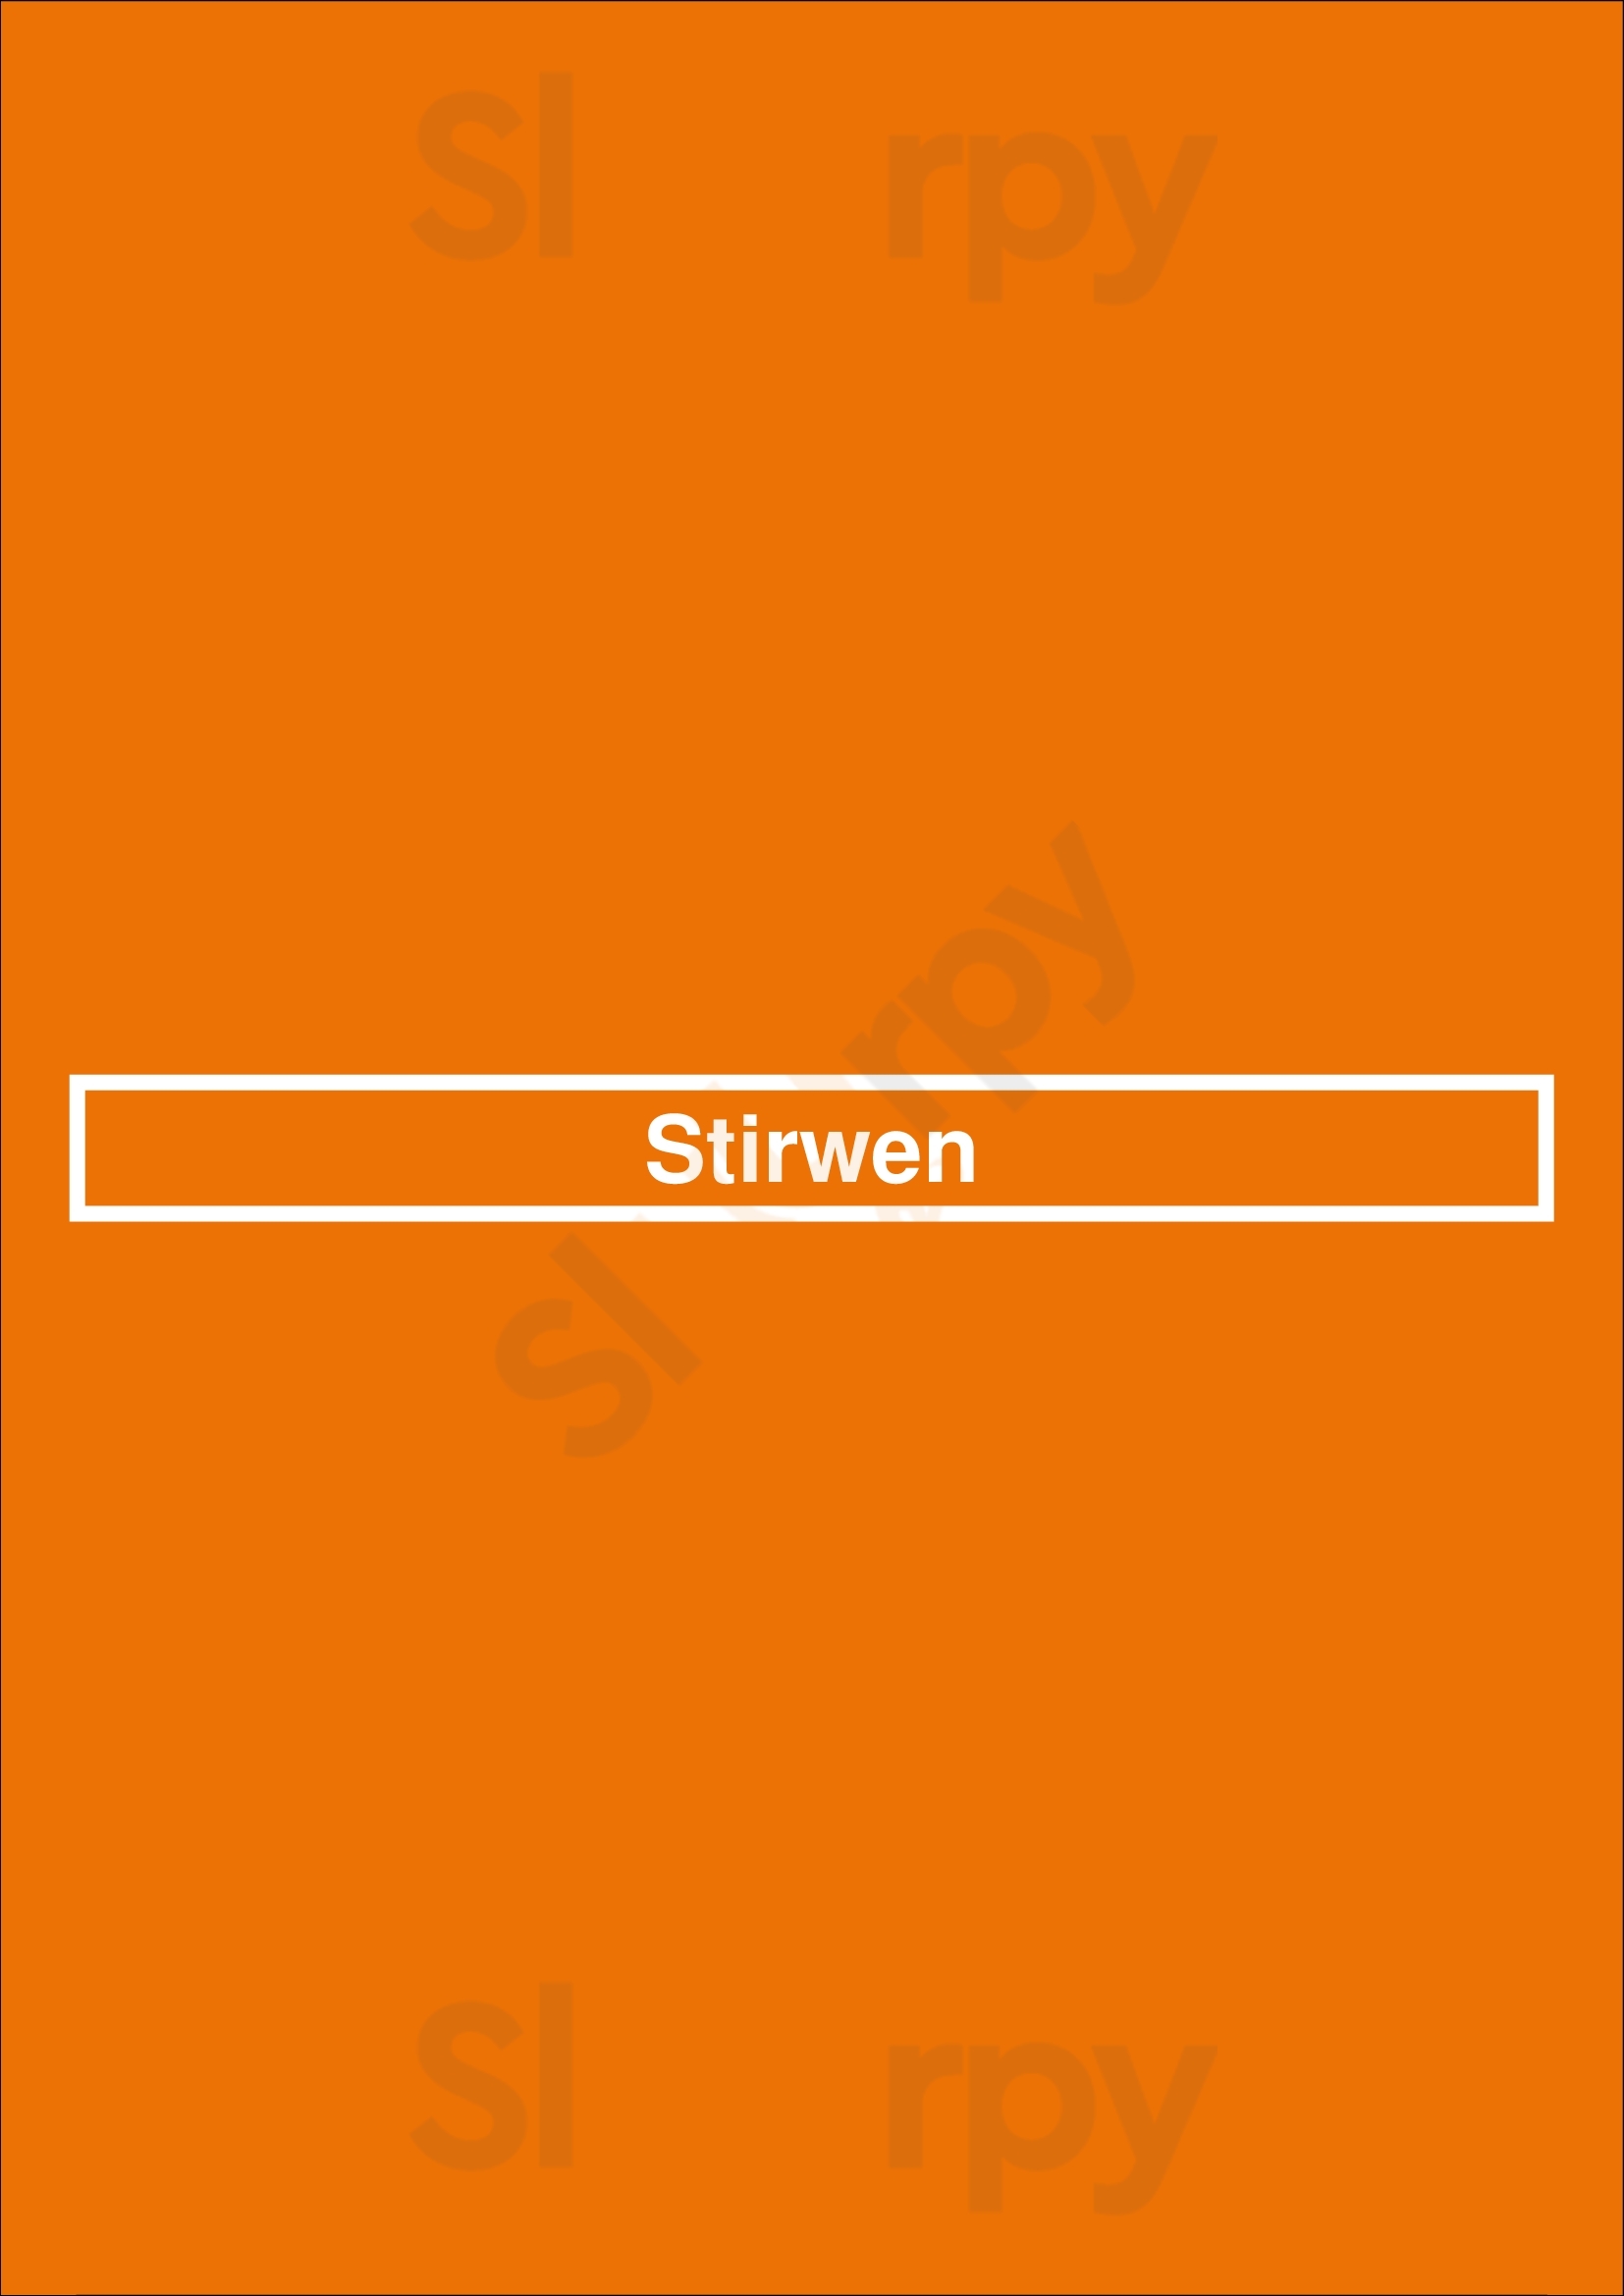 Stirwen Etterbeek Menu - 1